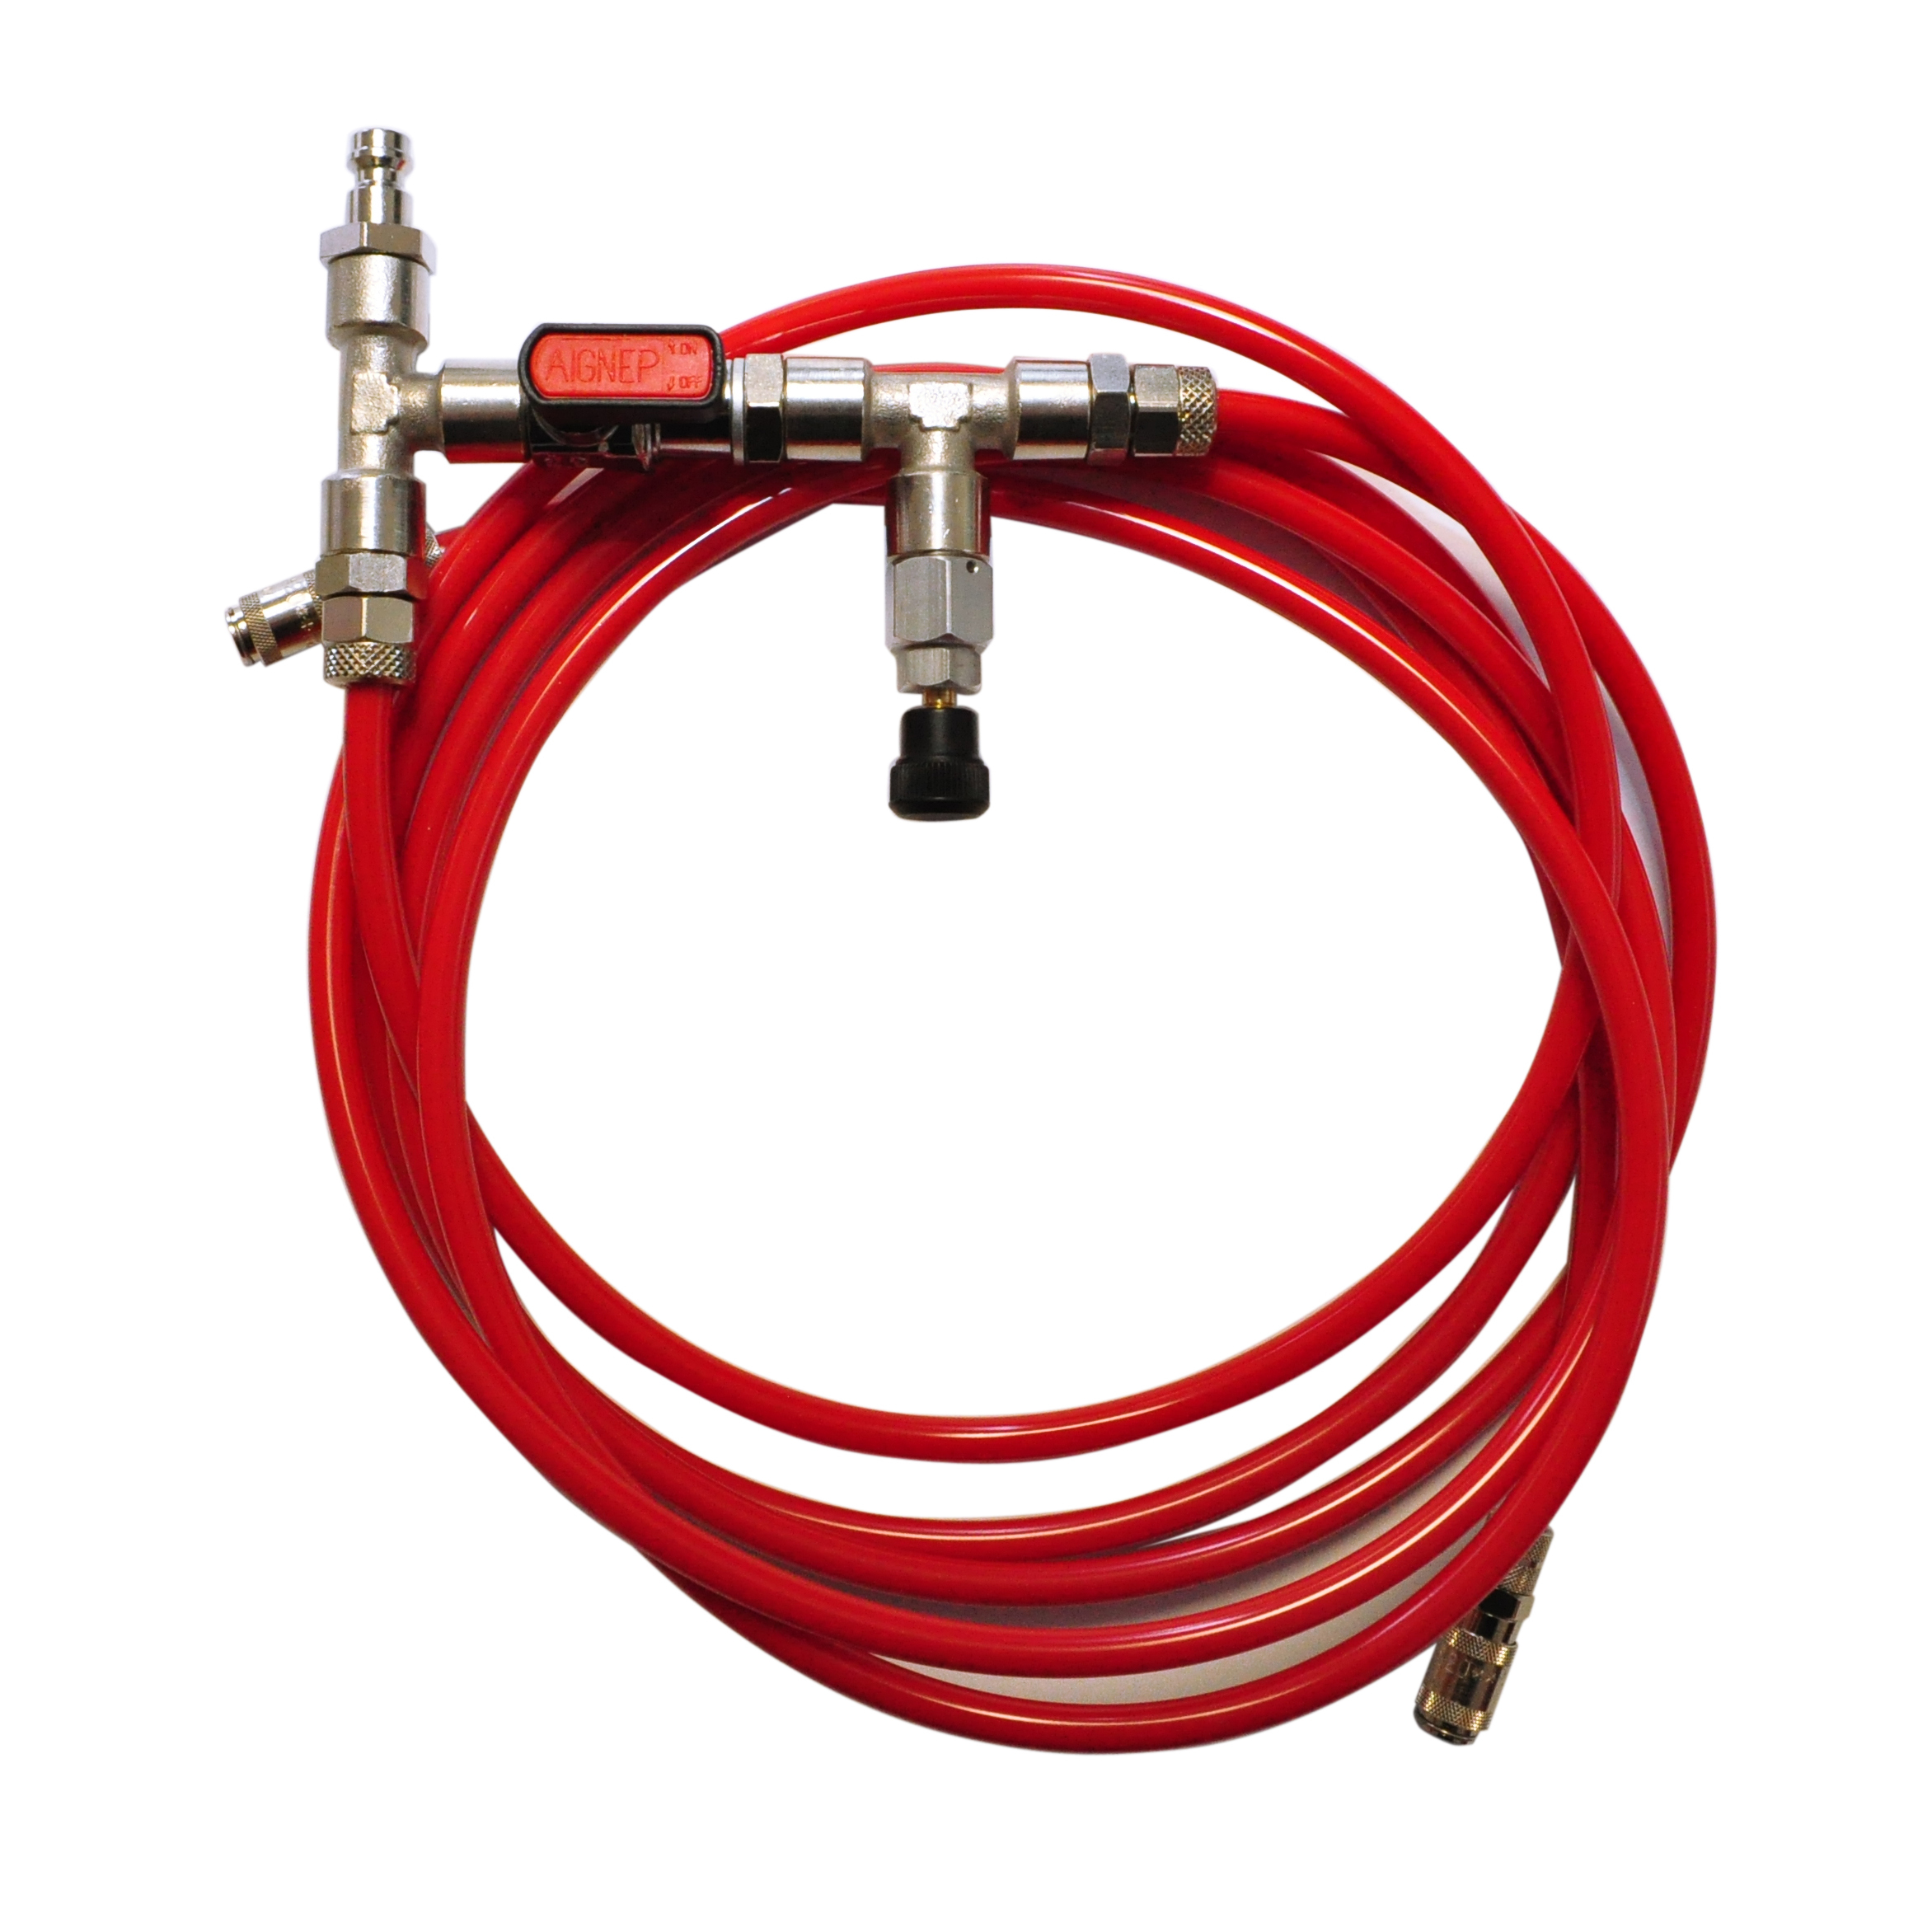 Connecting hose pressure tests 0-2 bar